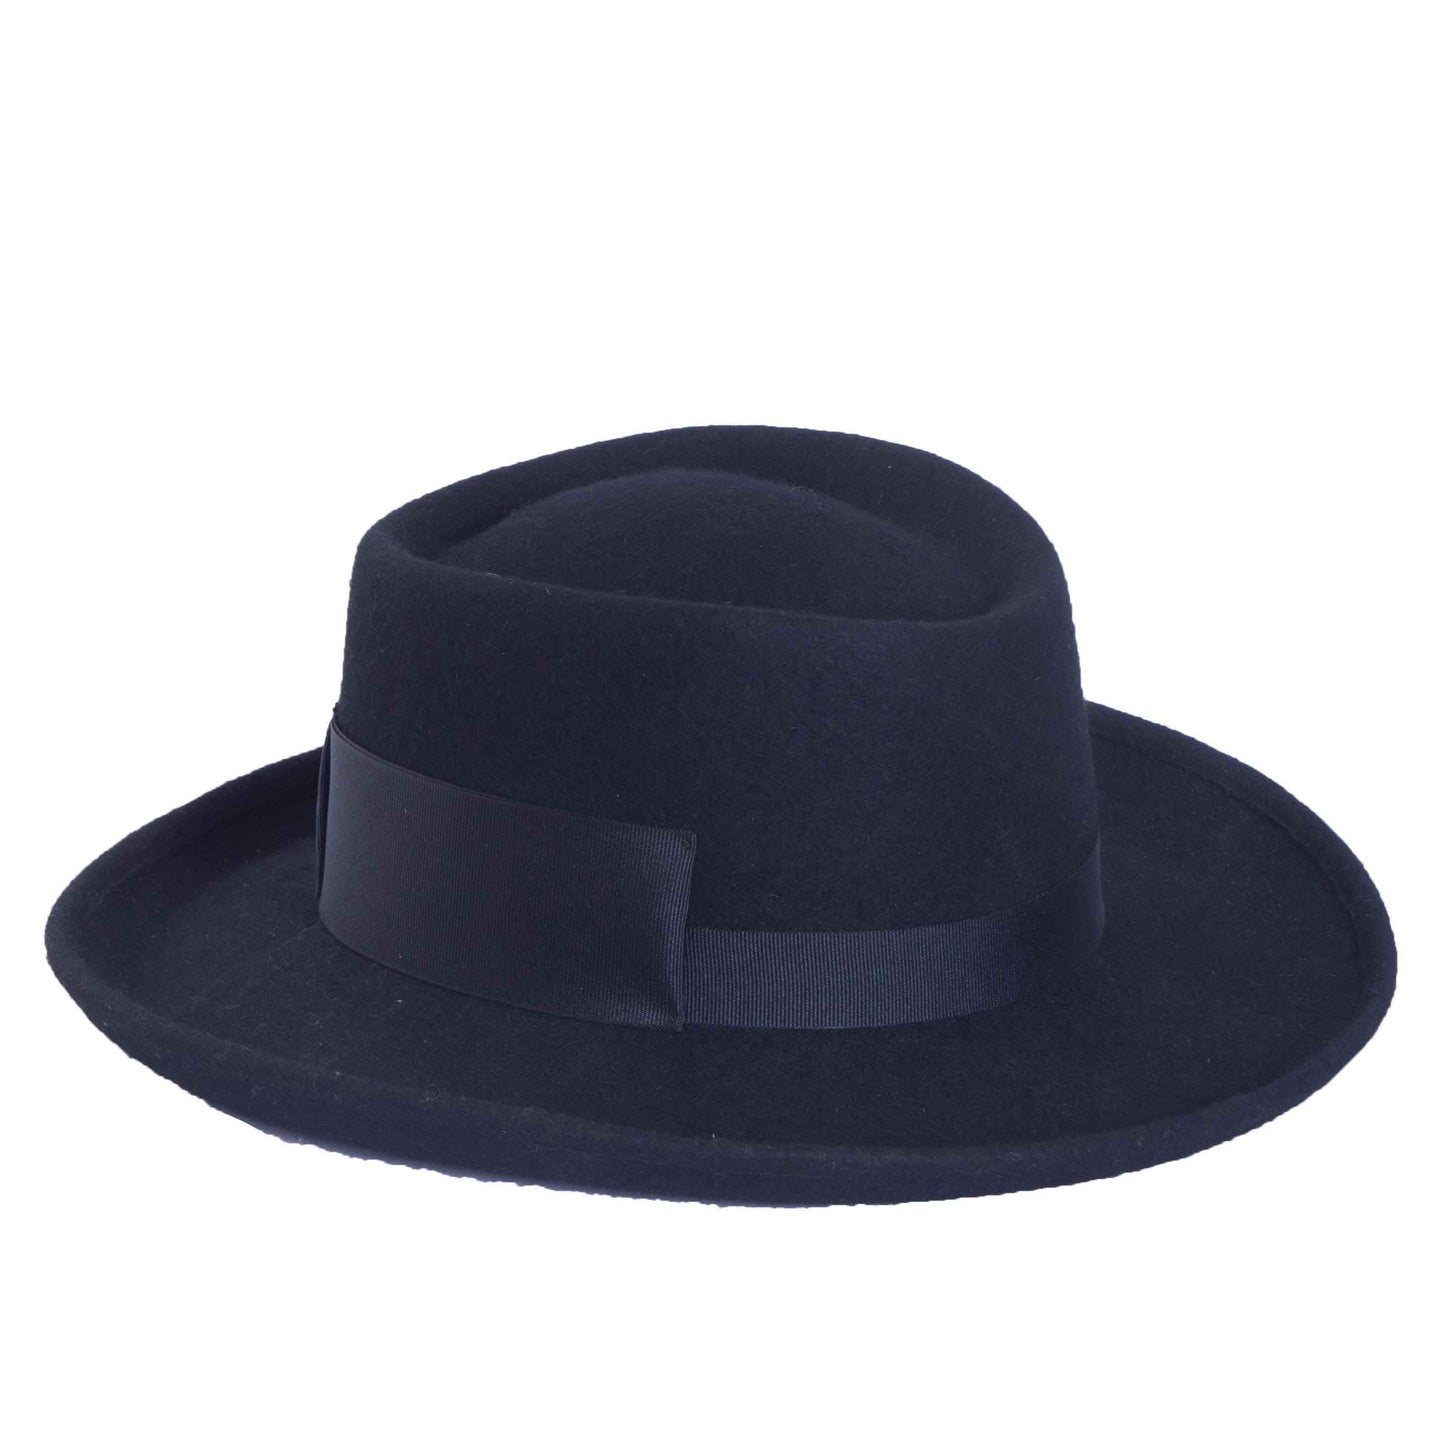 Kenzo, Wool Felt Hat, Black